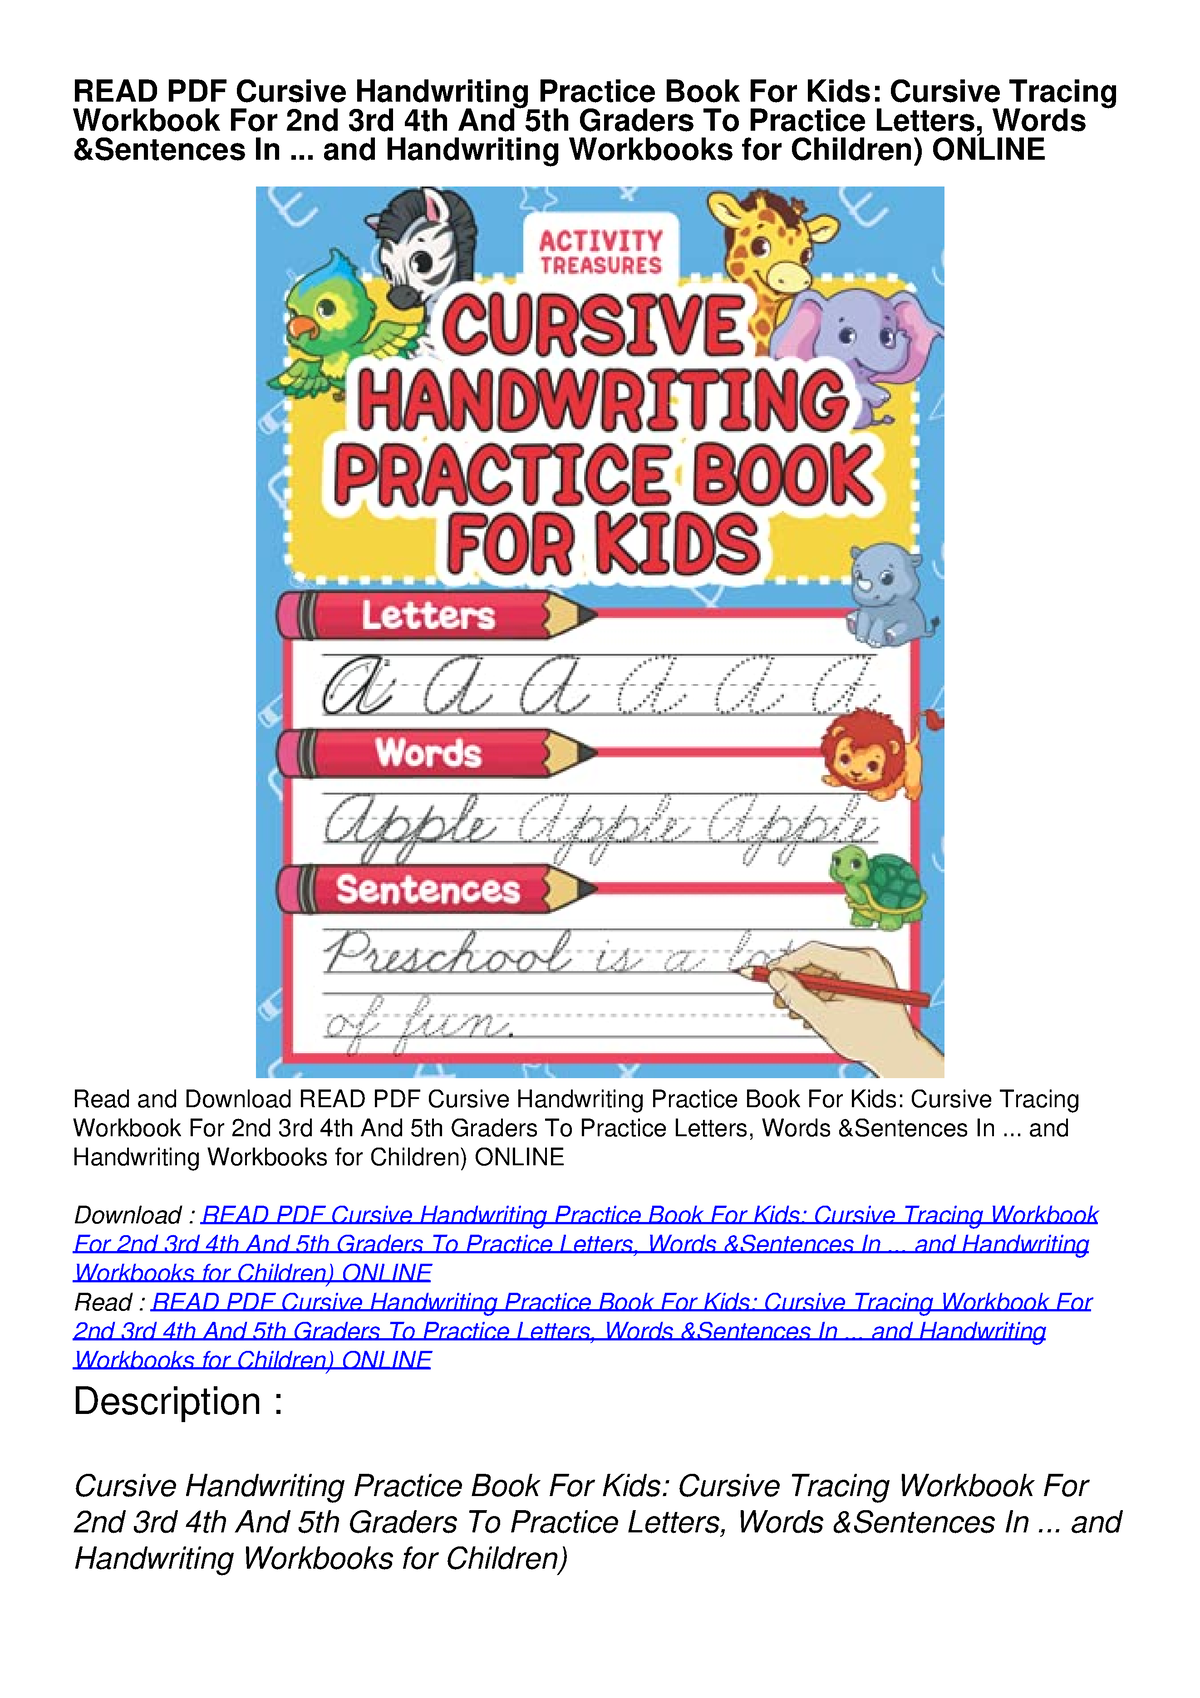 Cursive Handwriting Book DIGITAL COPY 